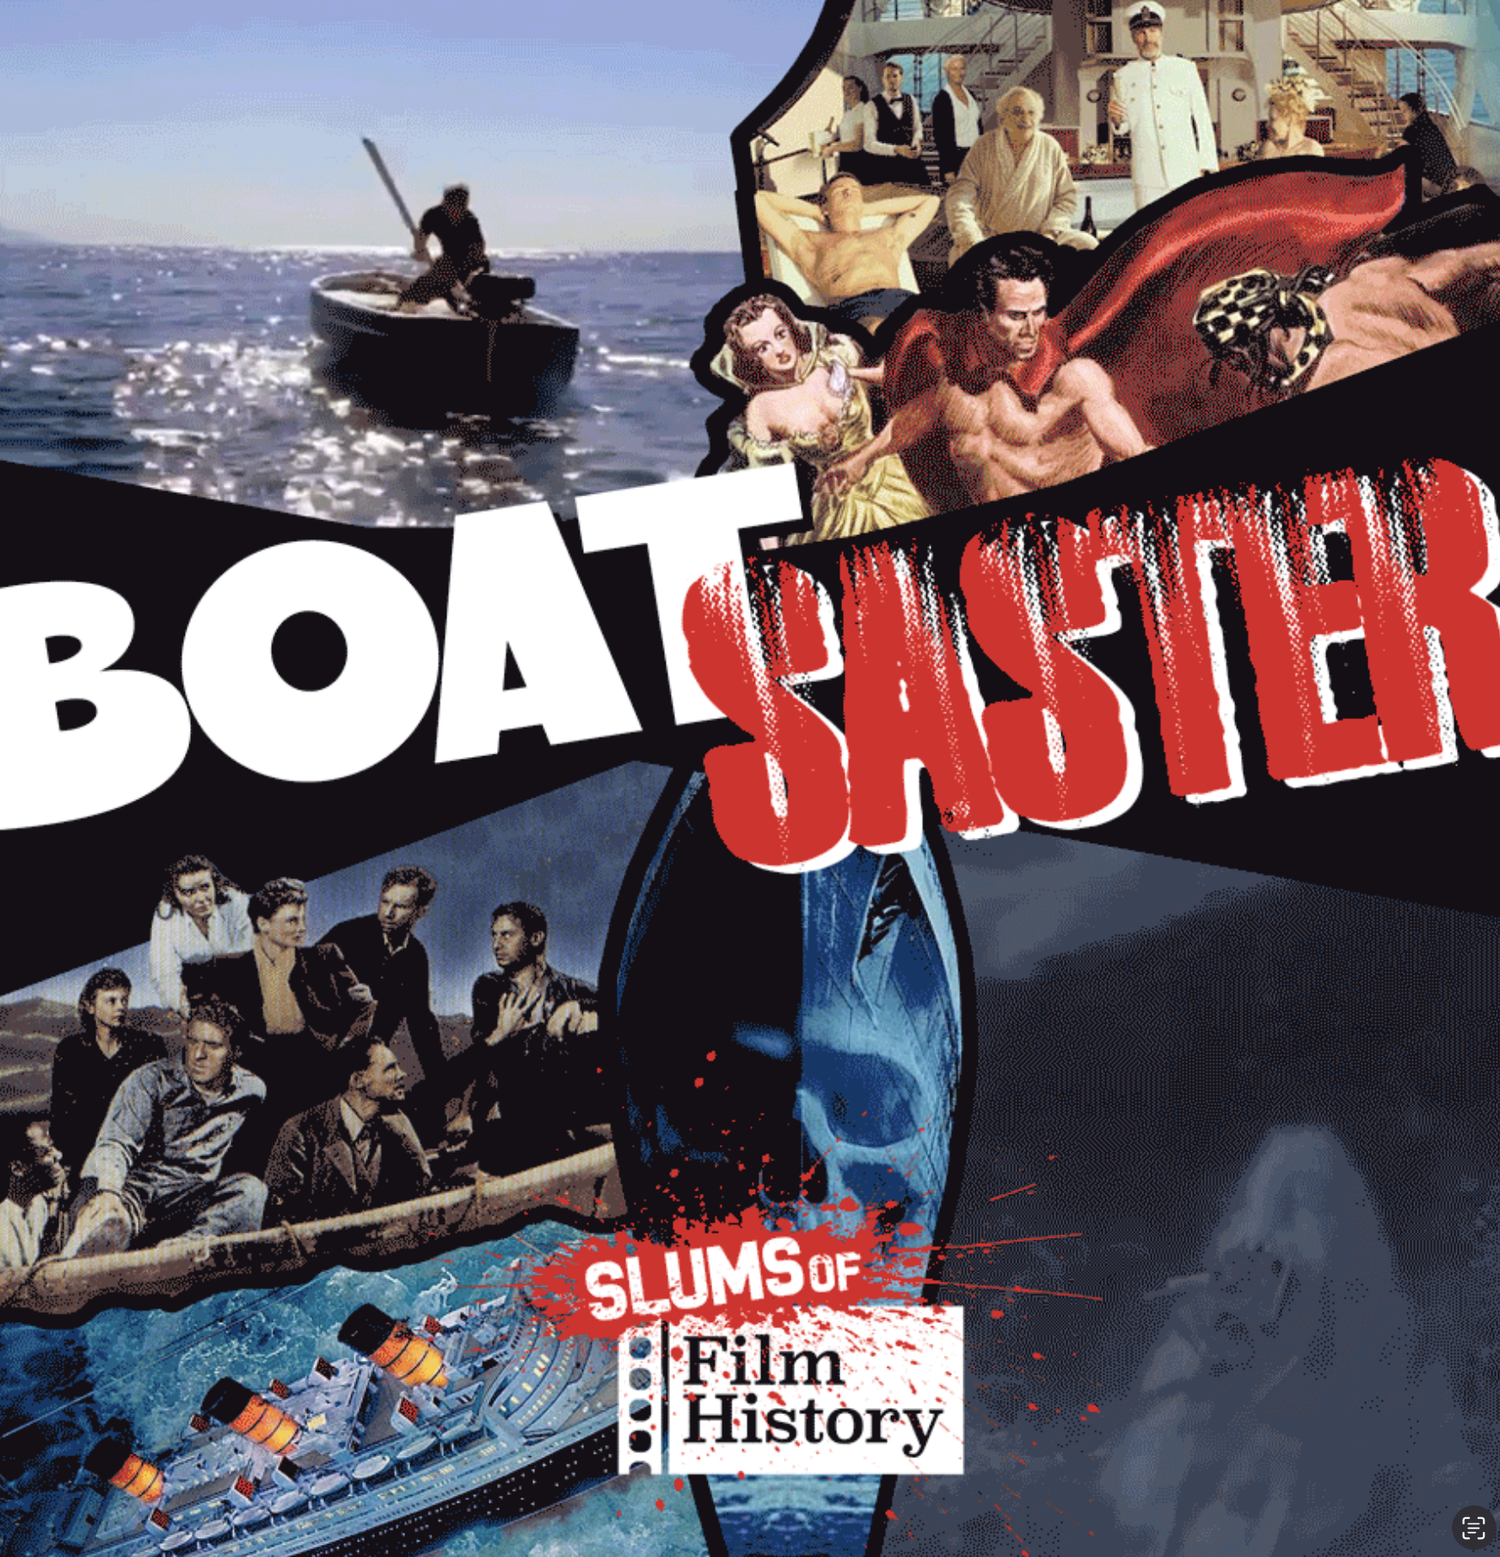 Episode 83: Boatsaster